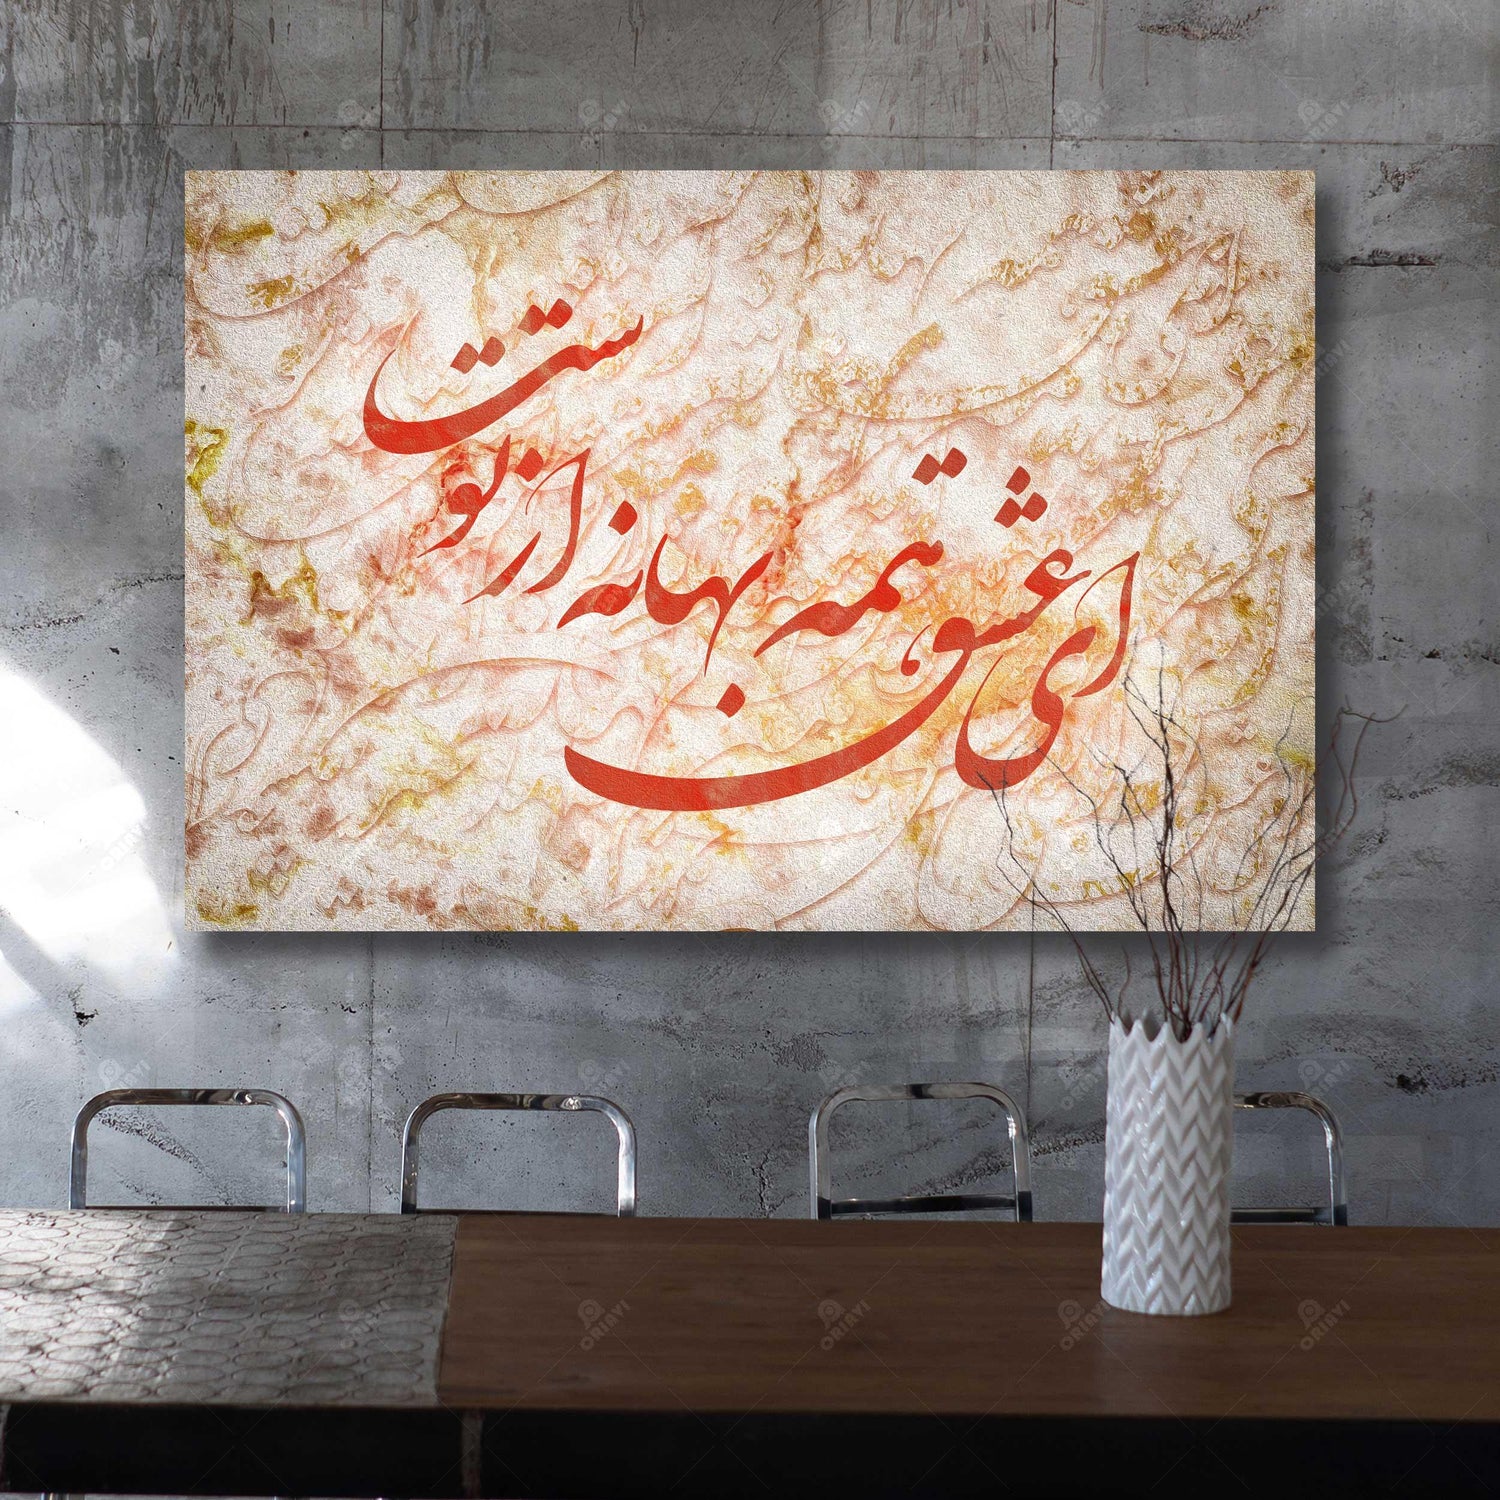 ای عشق همه بهانه از توست - Persian calligraphy wall art, High Quality and Ready to Hang. This Modern Persian Wall décor completes and elevates your home. Amazing and eye-catching for your home or office.